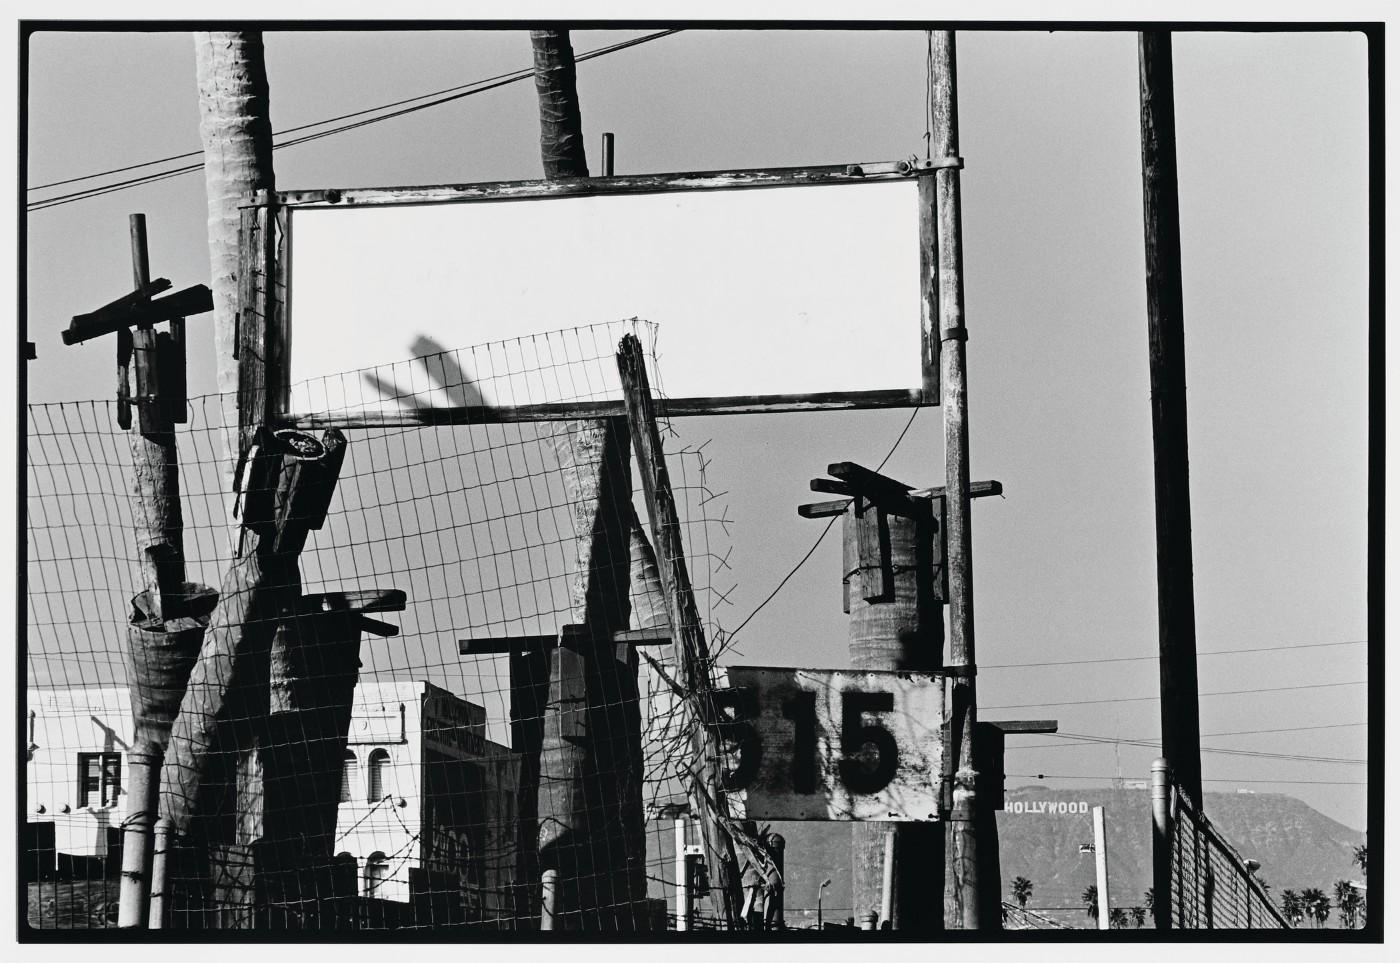 Robert Rauschenberg, Los Angeles, California, 1981